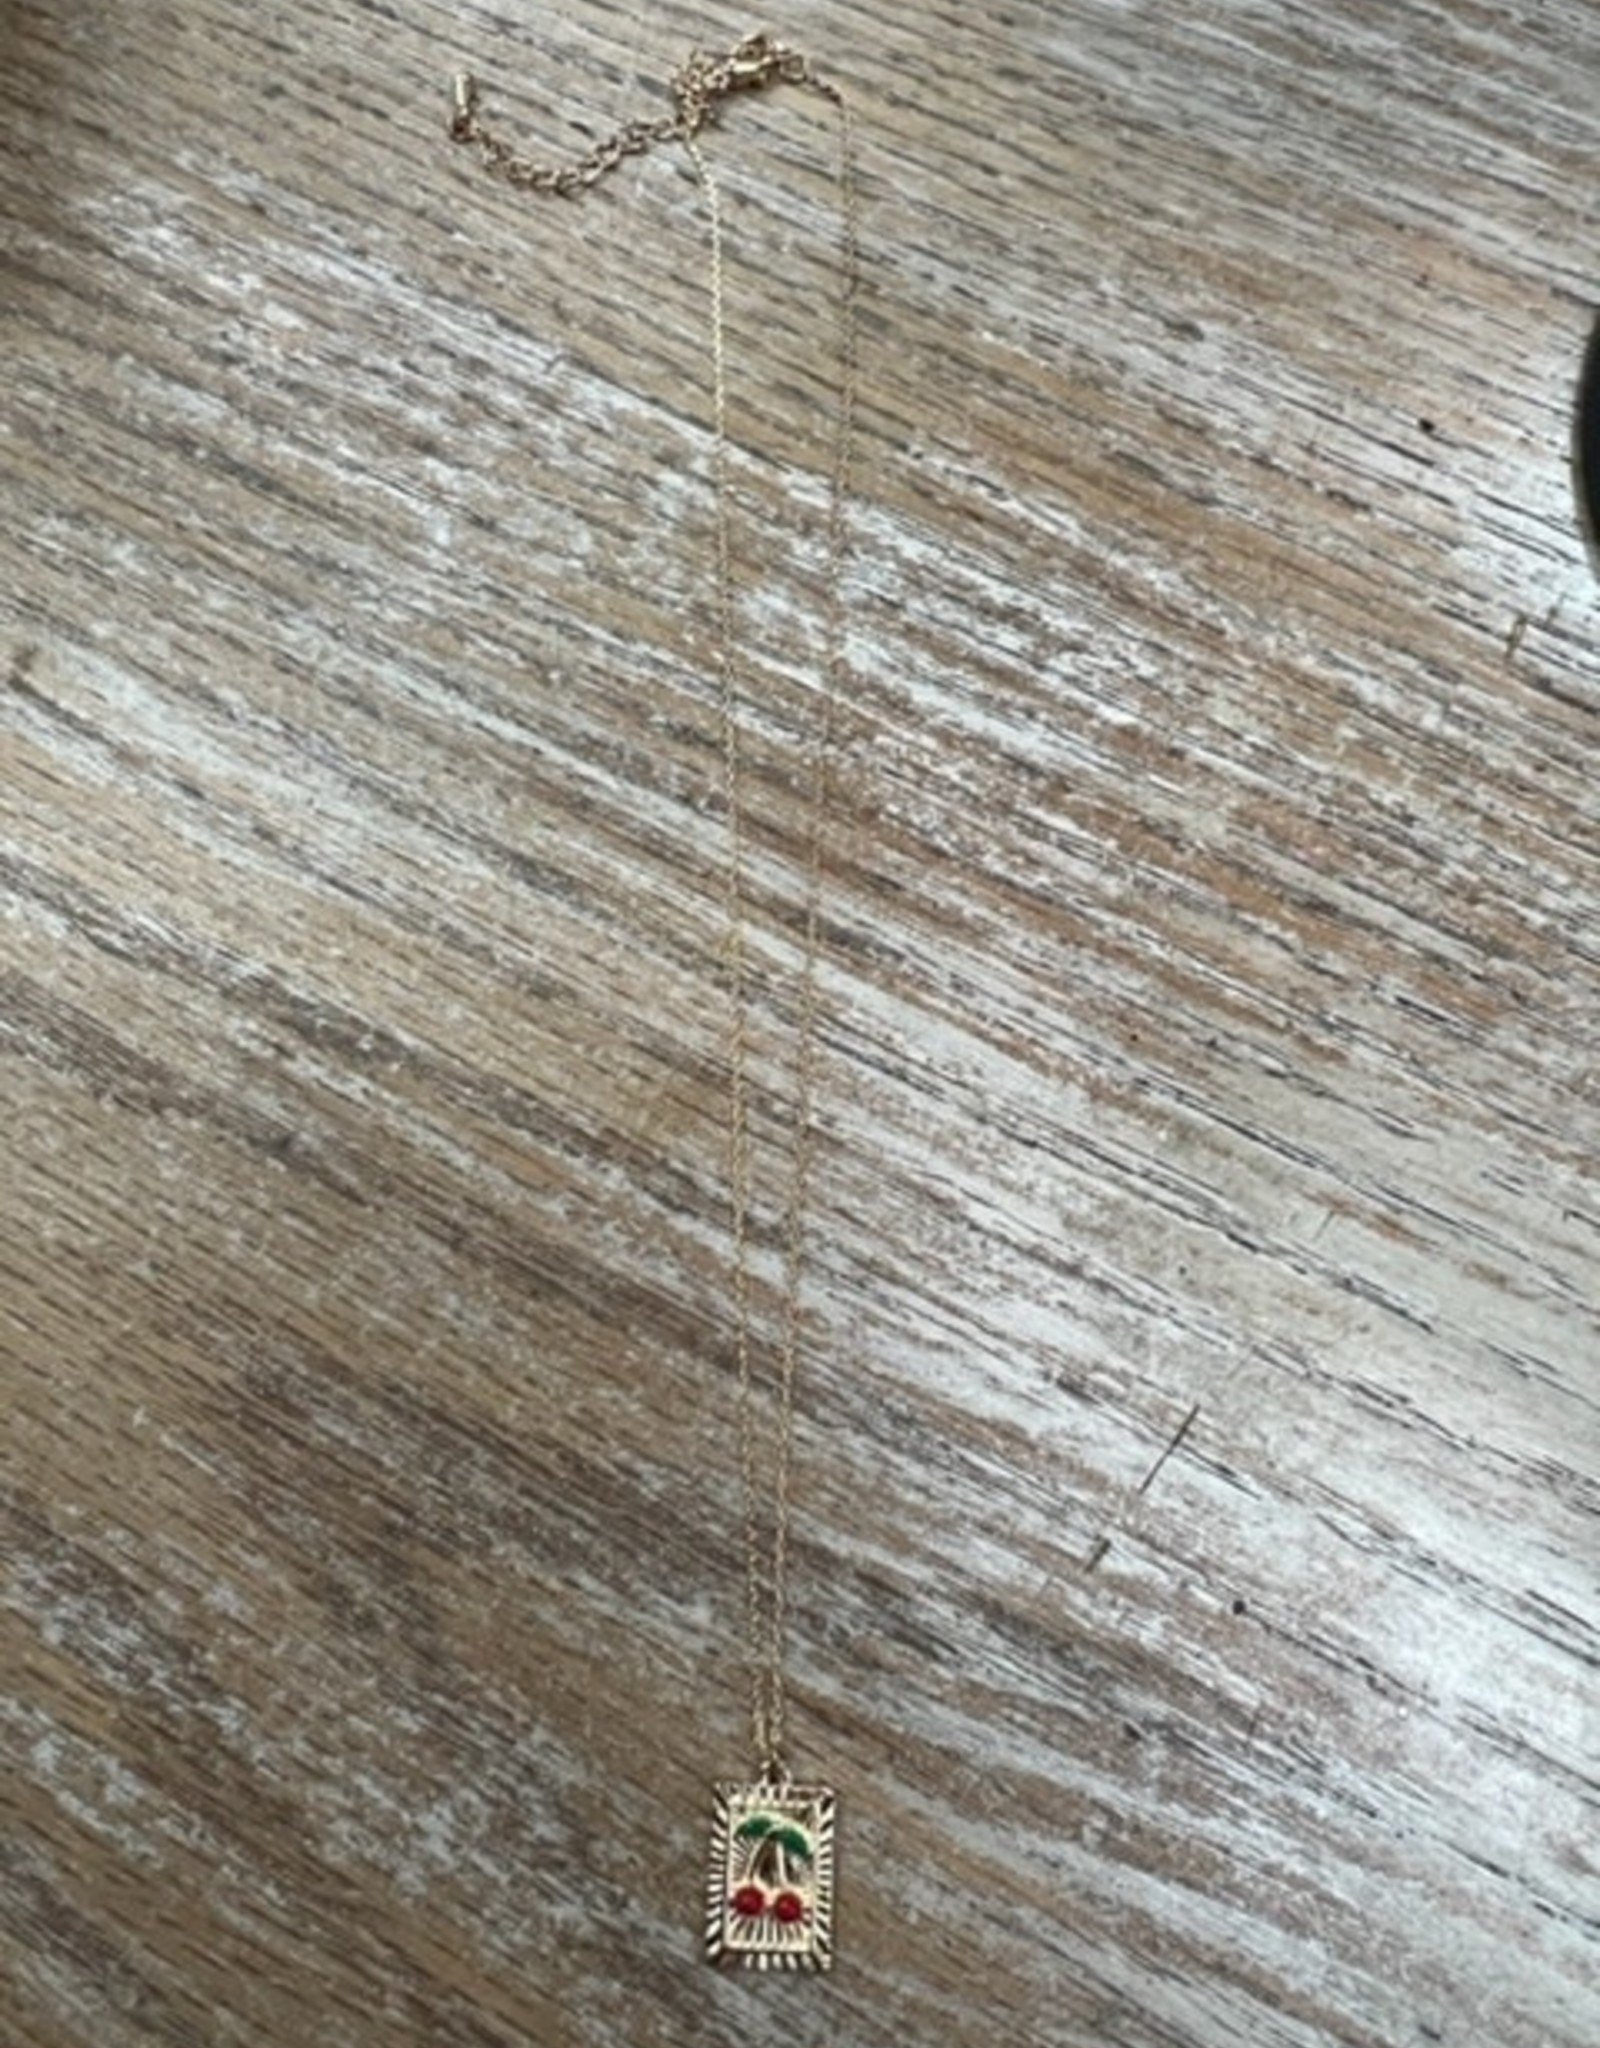 Jewelry Gold Cherry Pendant Necklace